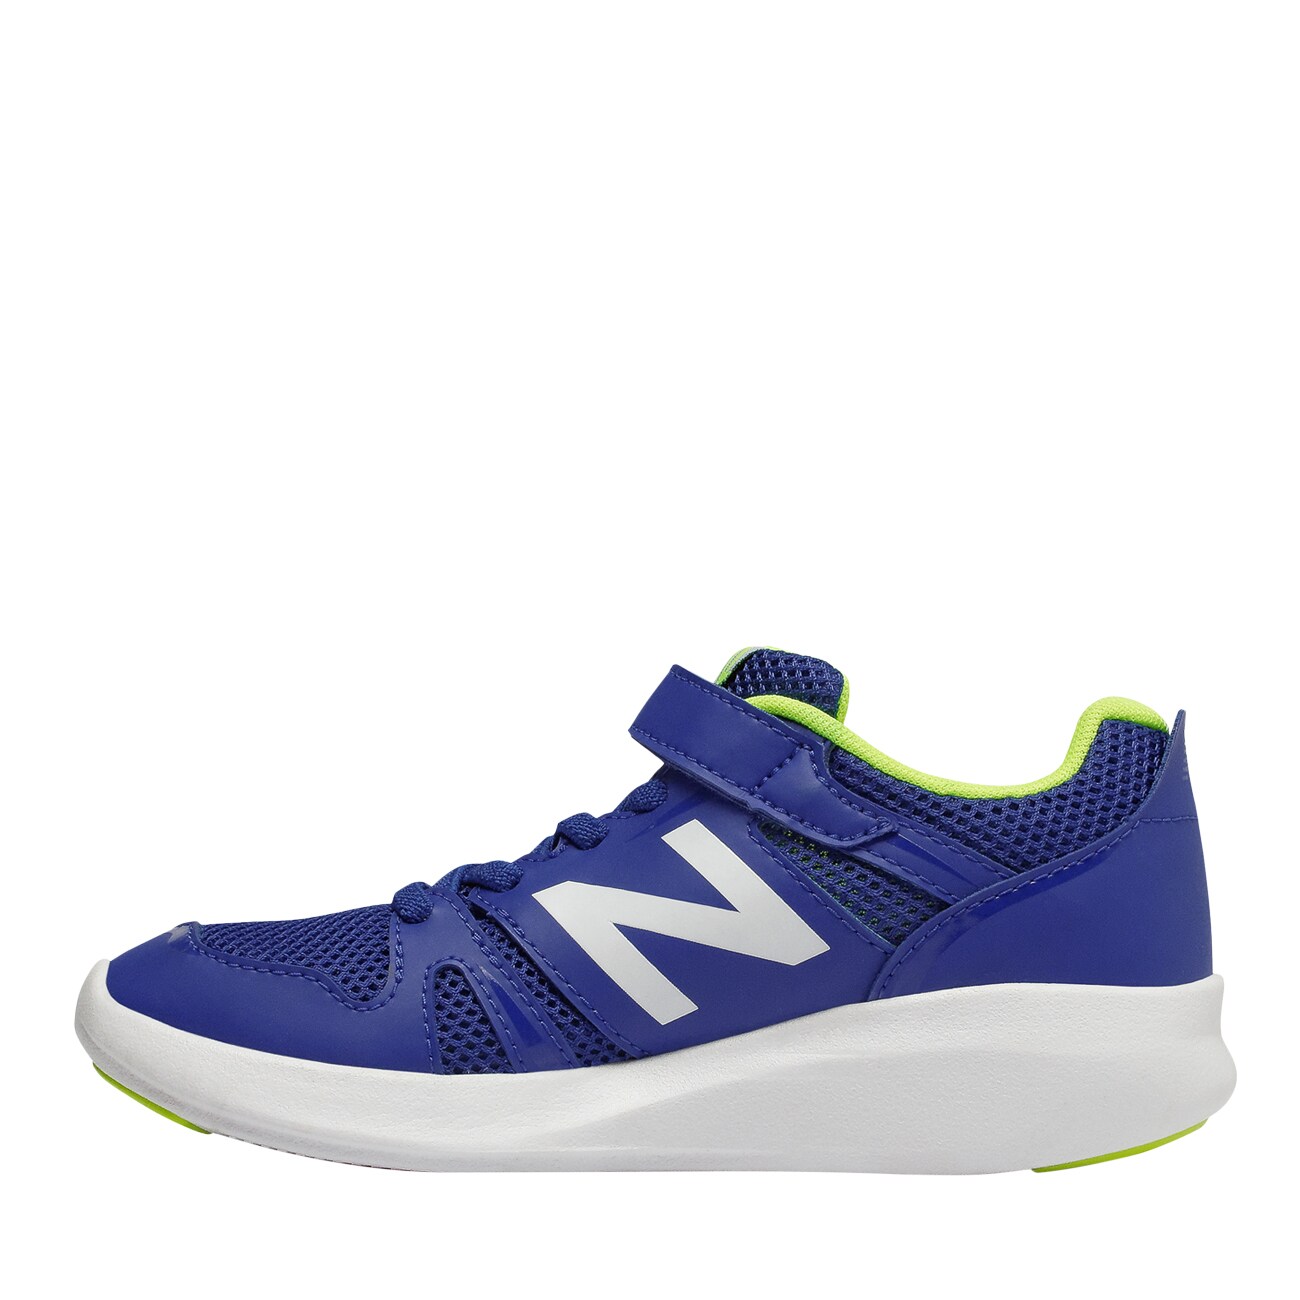 New Balance Youth KV570 Runner | The Shoe Company